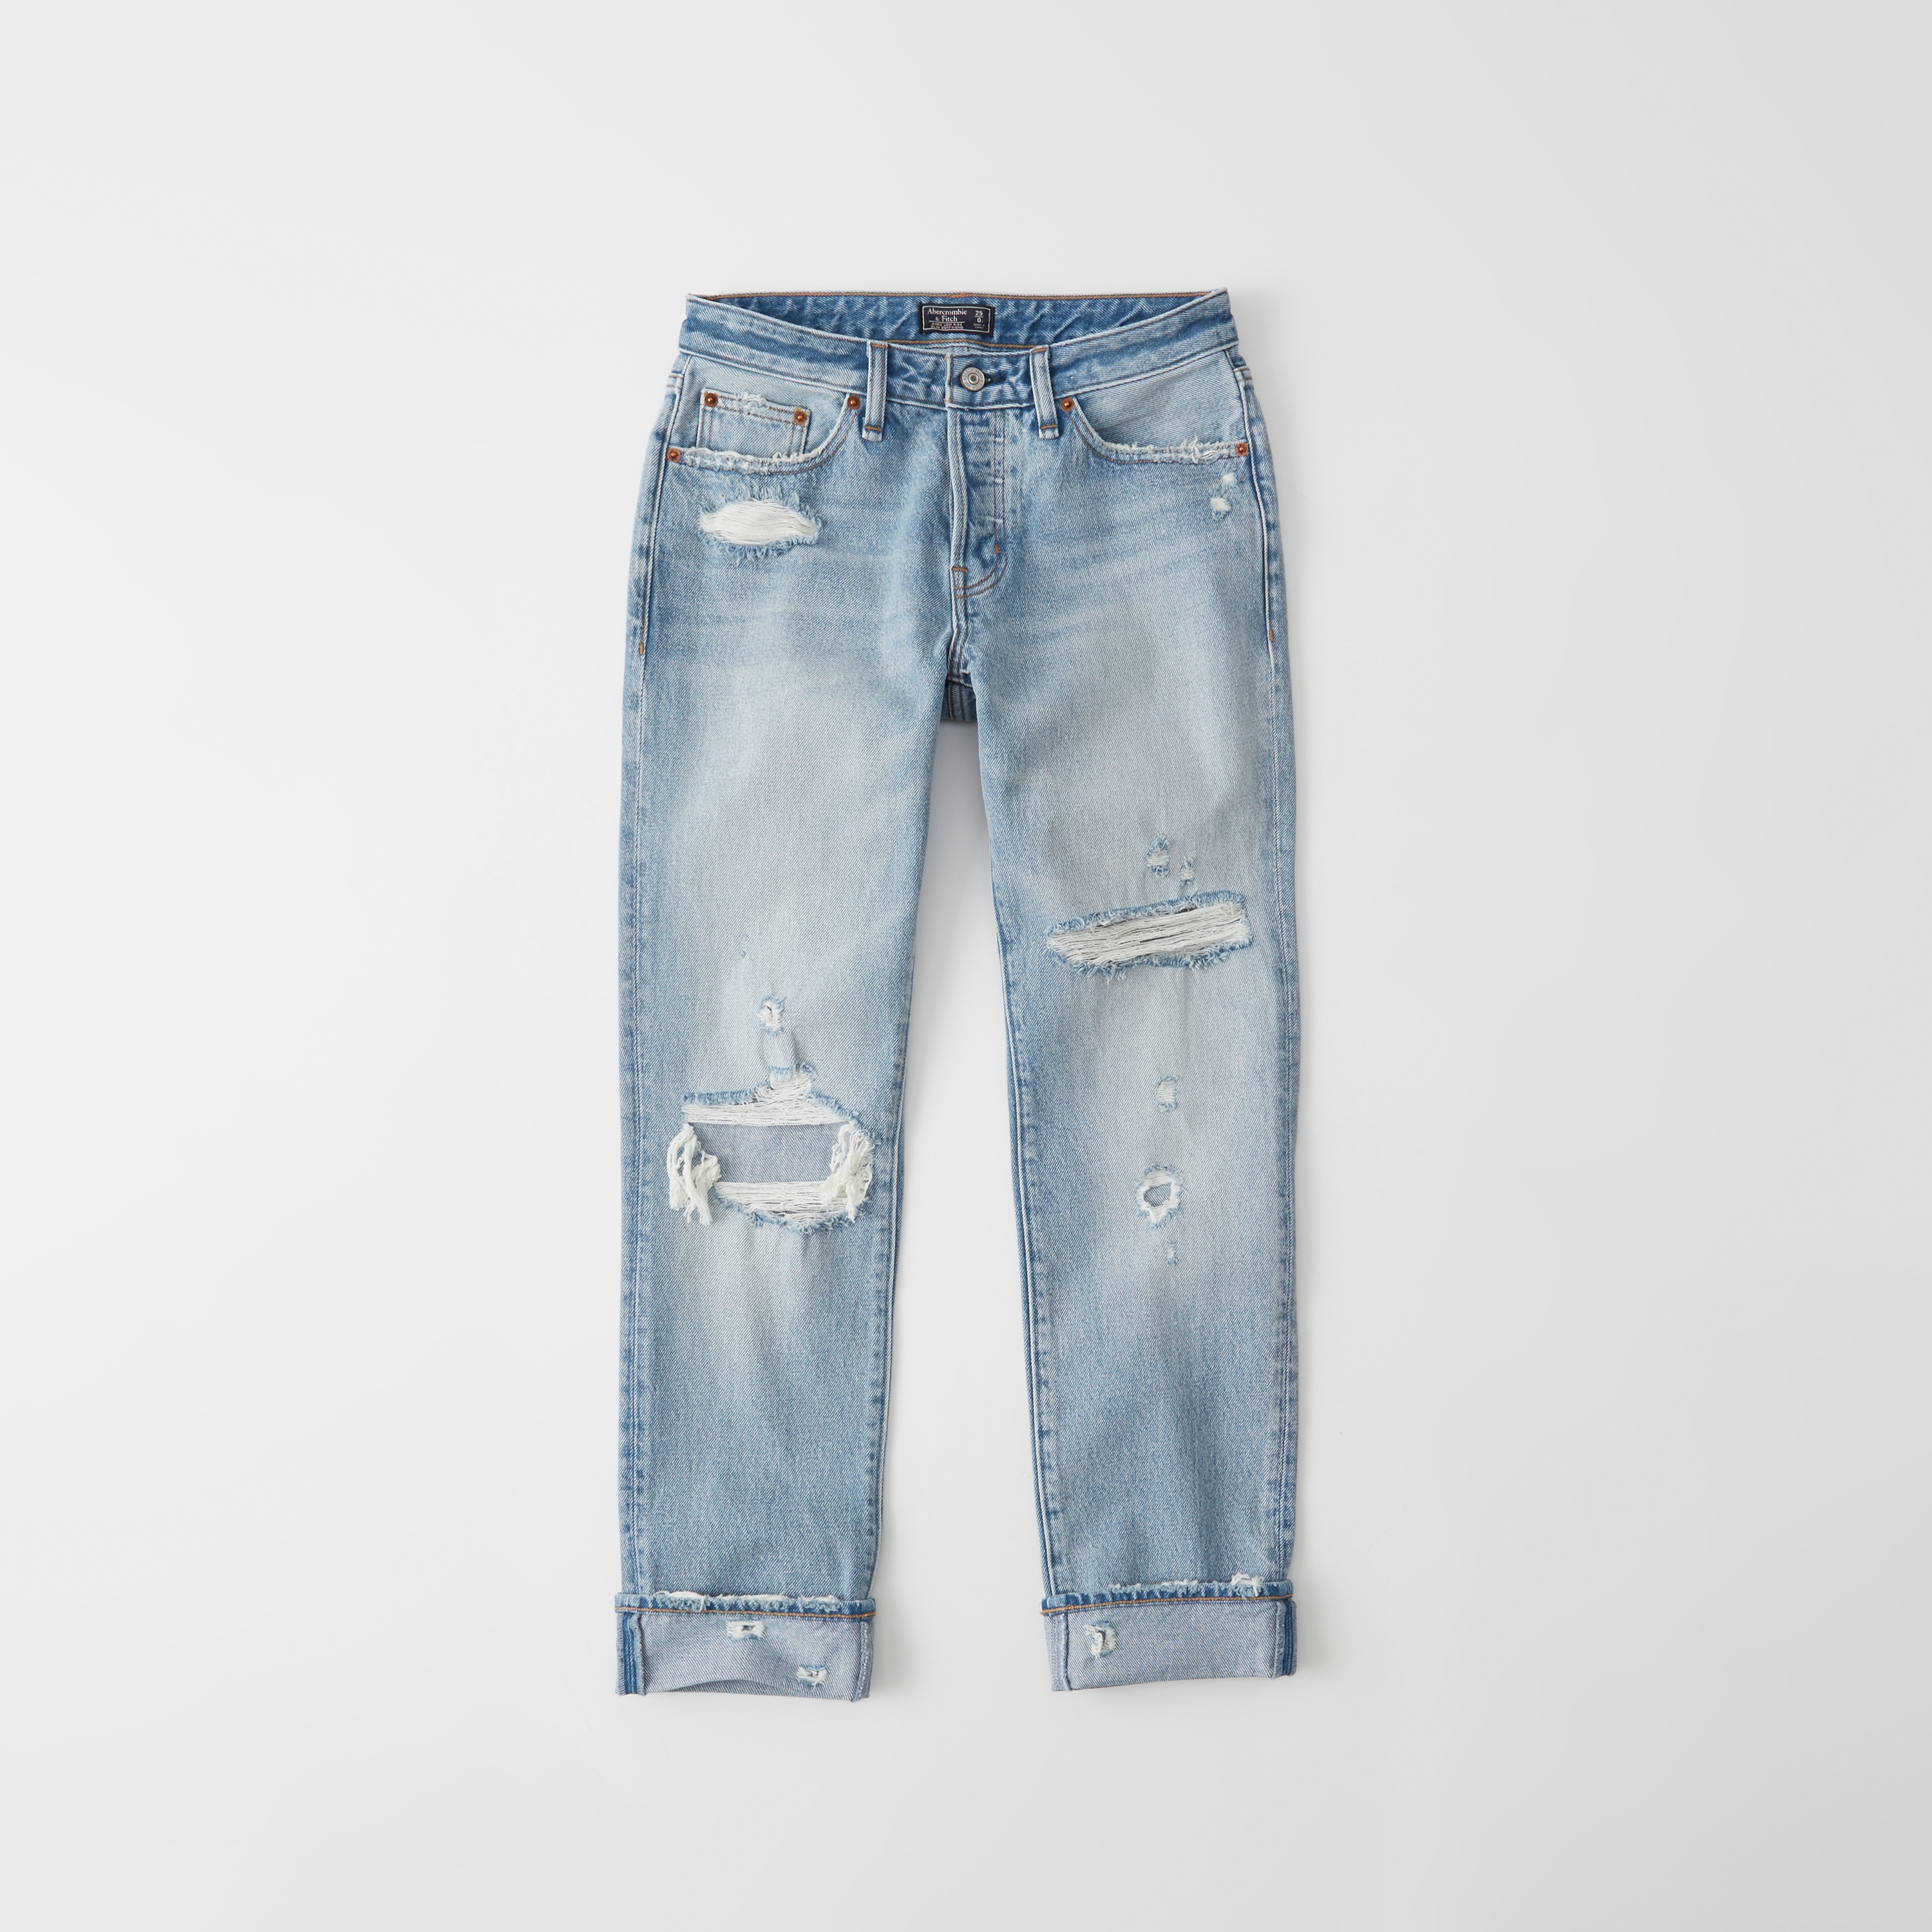 levis jeans price women